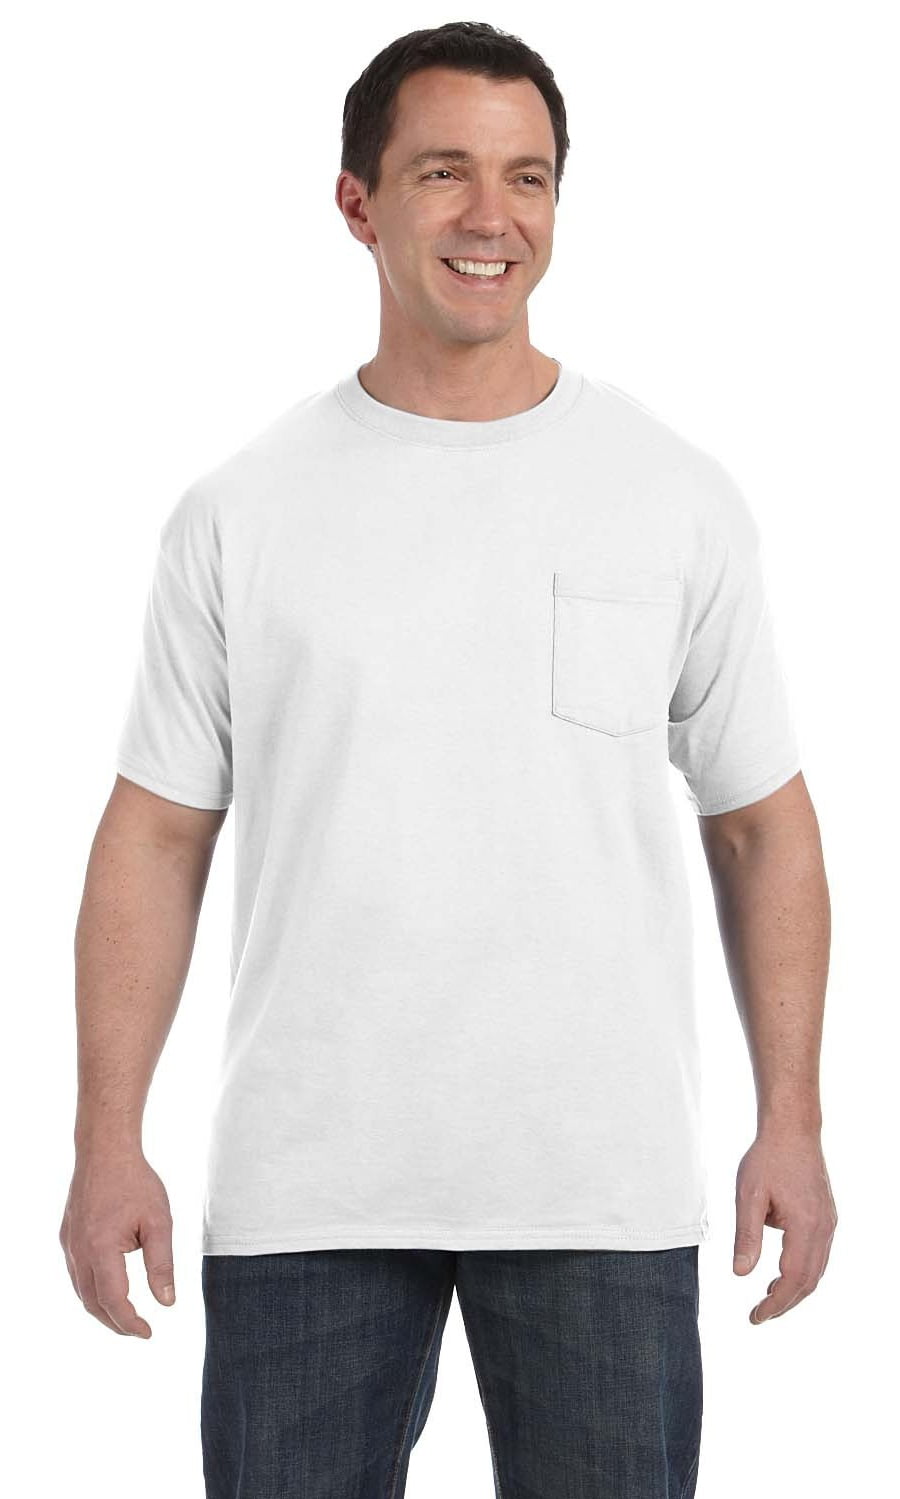 Hanes - The Hanes Mens 6.1 oz Tagless Pocket T-Shirt